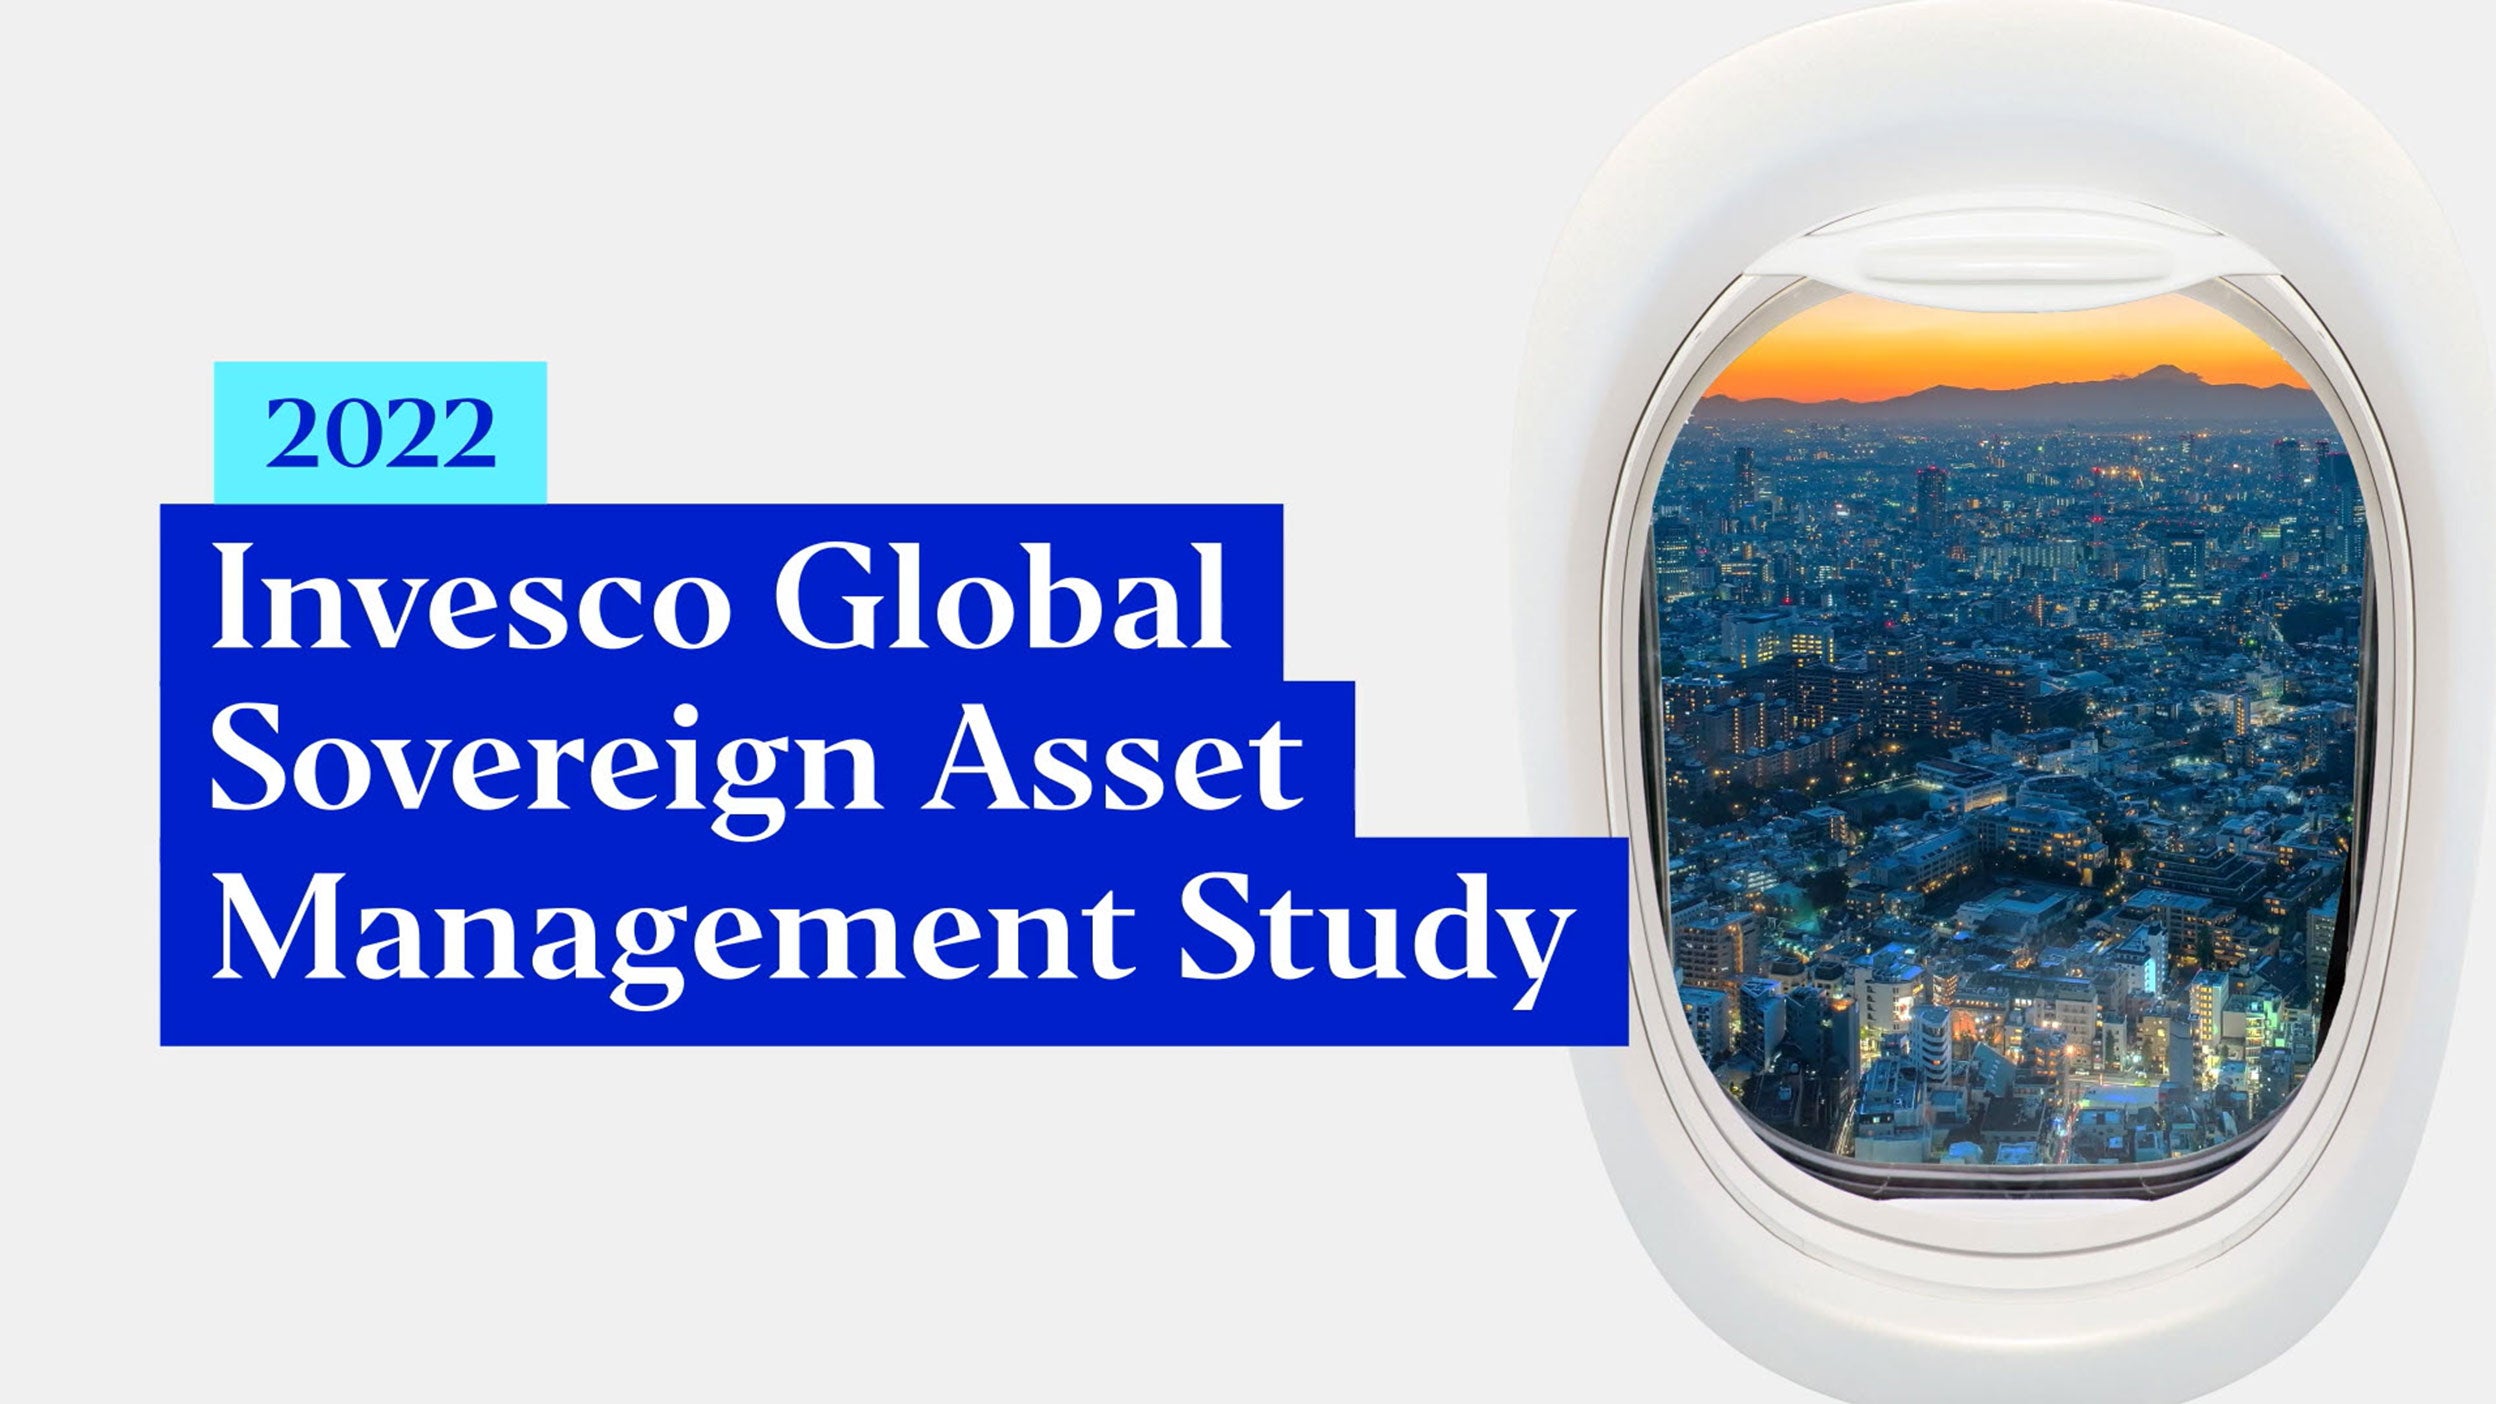 Invesco Global Sovereign Asset Management Study 2022